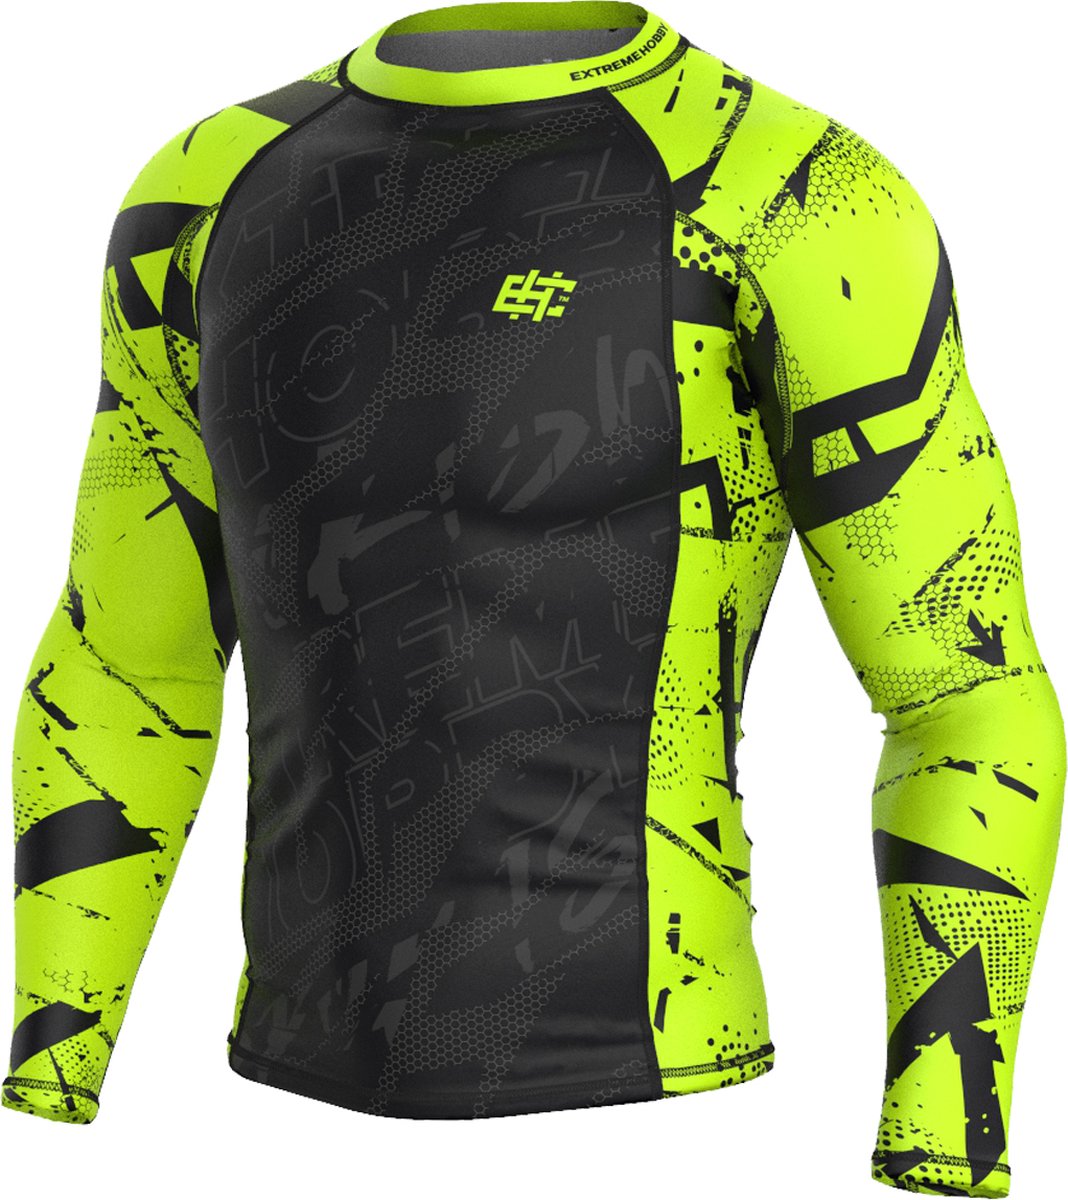 Extreme Hobby - Neo Lime - Rashguard Long Sleeve - Compression Shirt - Zwaart, Lime - Maat L